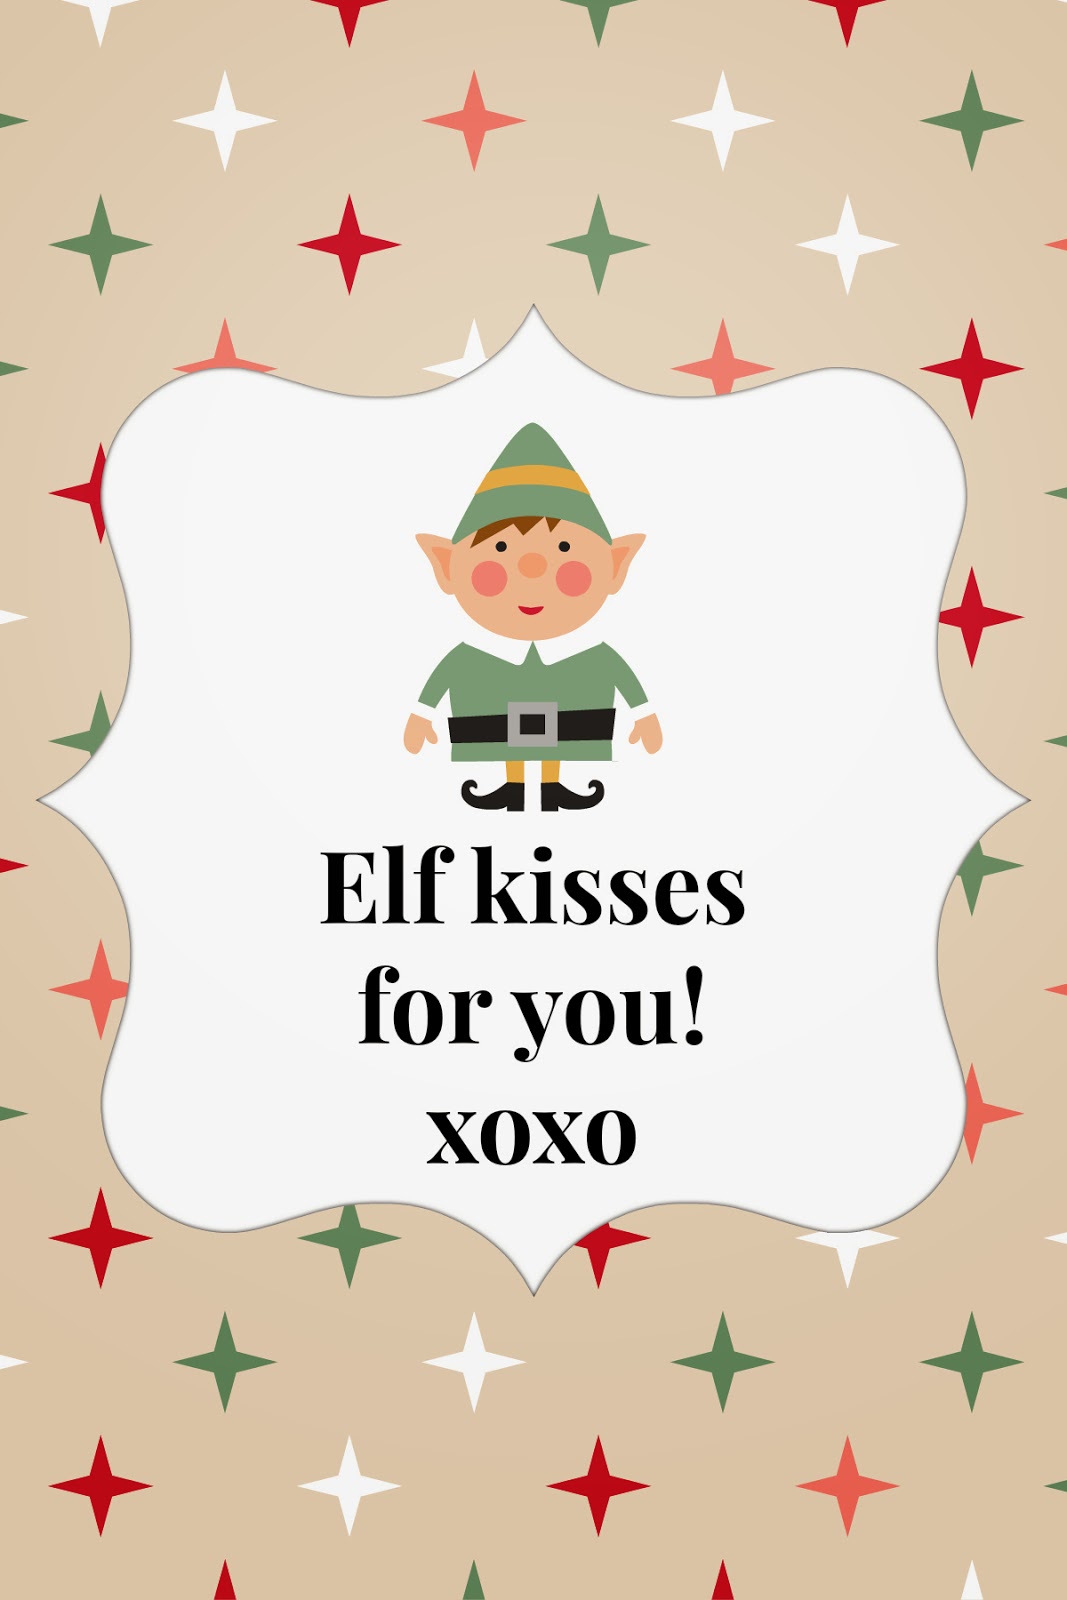 elf-on-the-shelf-idea-elf-kisses-free-printable-savvymom